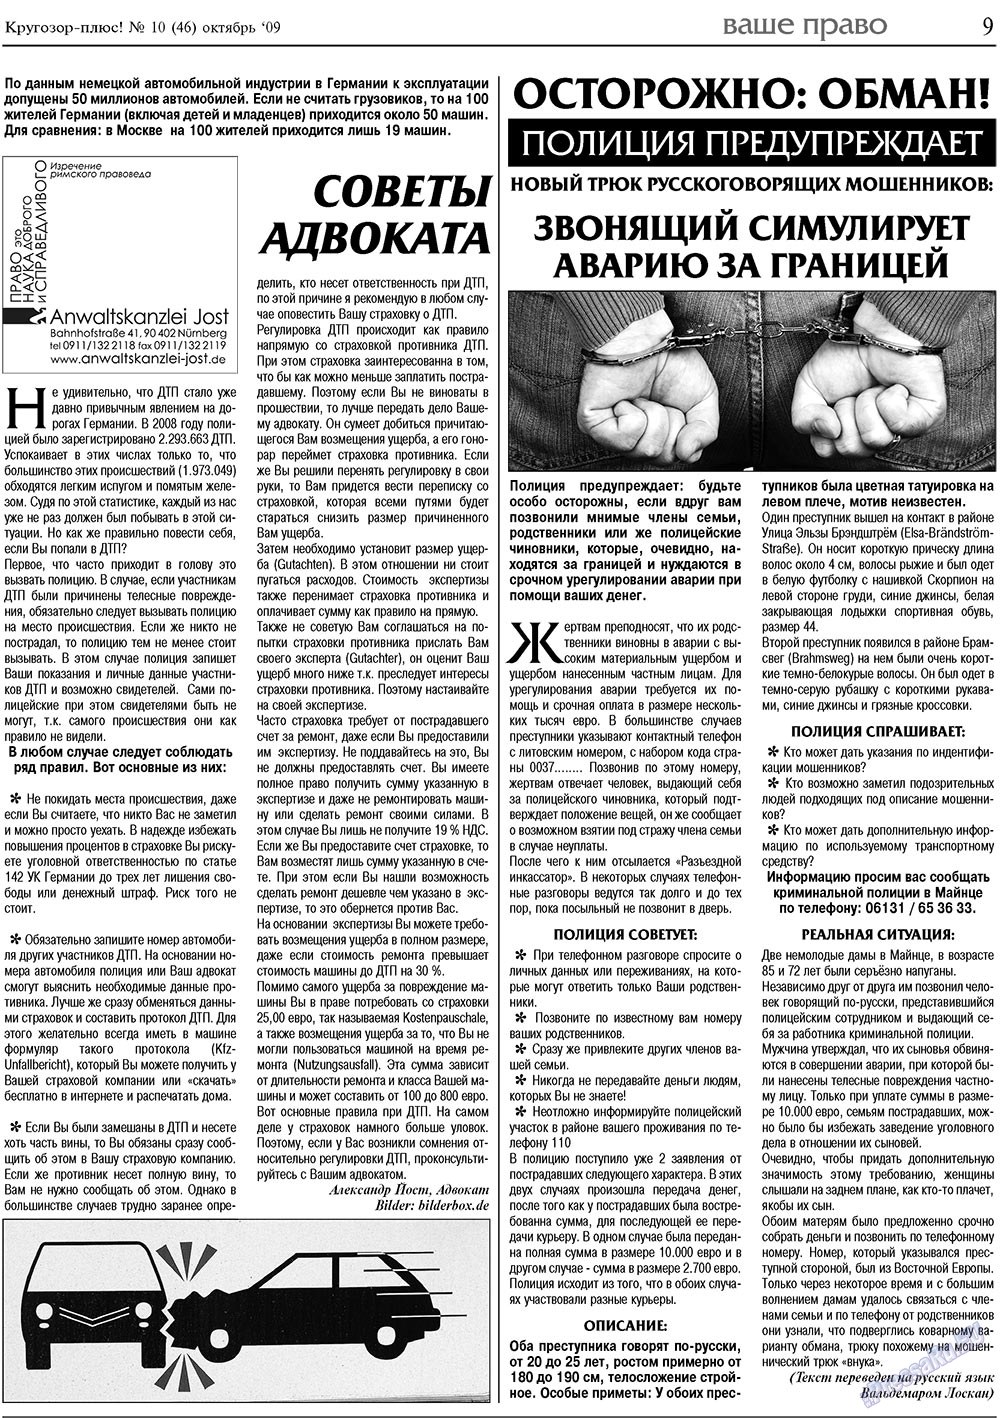 Кругозор плюс! (газета). 2009 год, номер 10, стр. 9